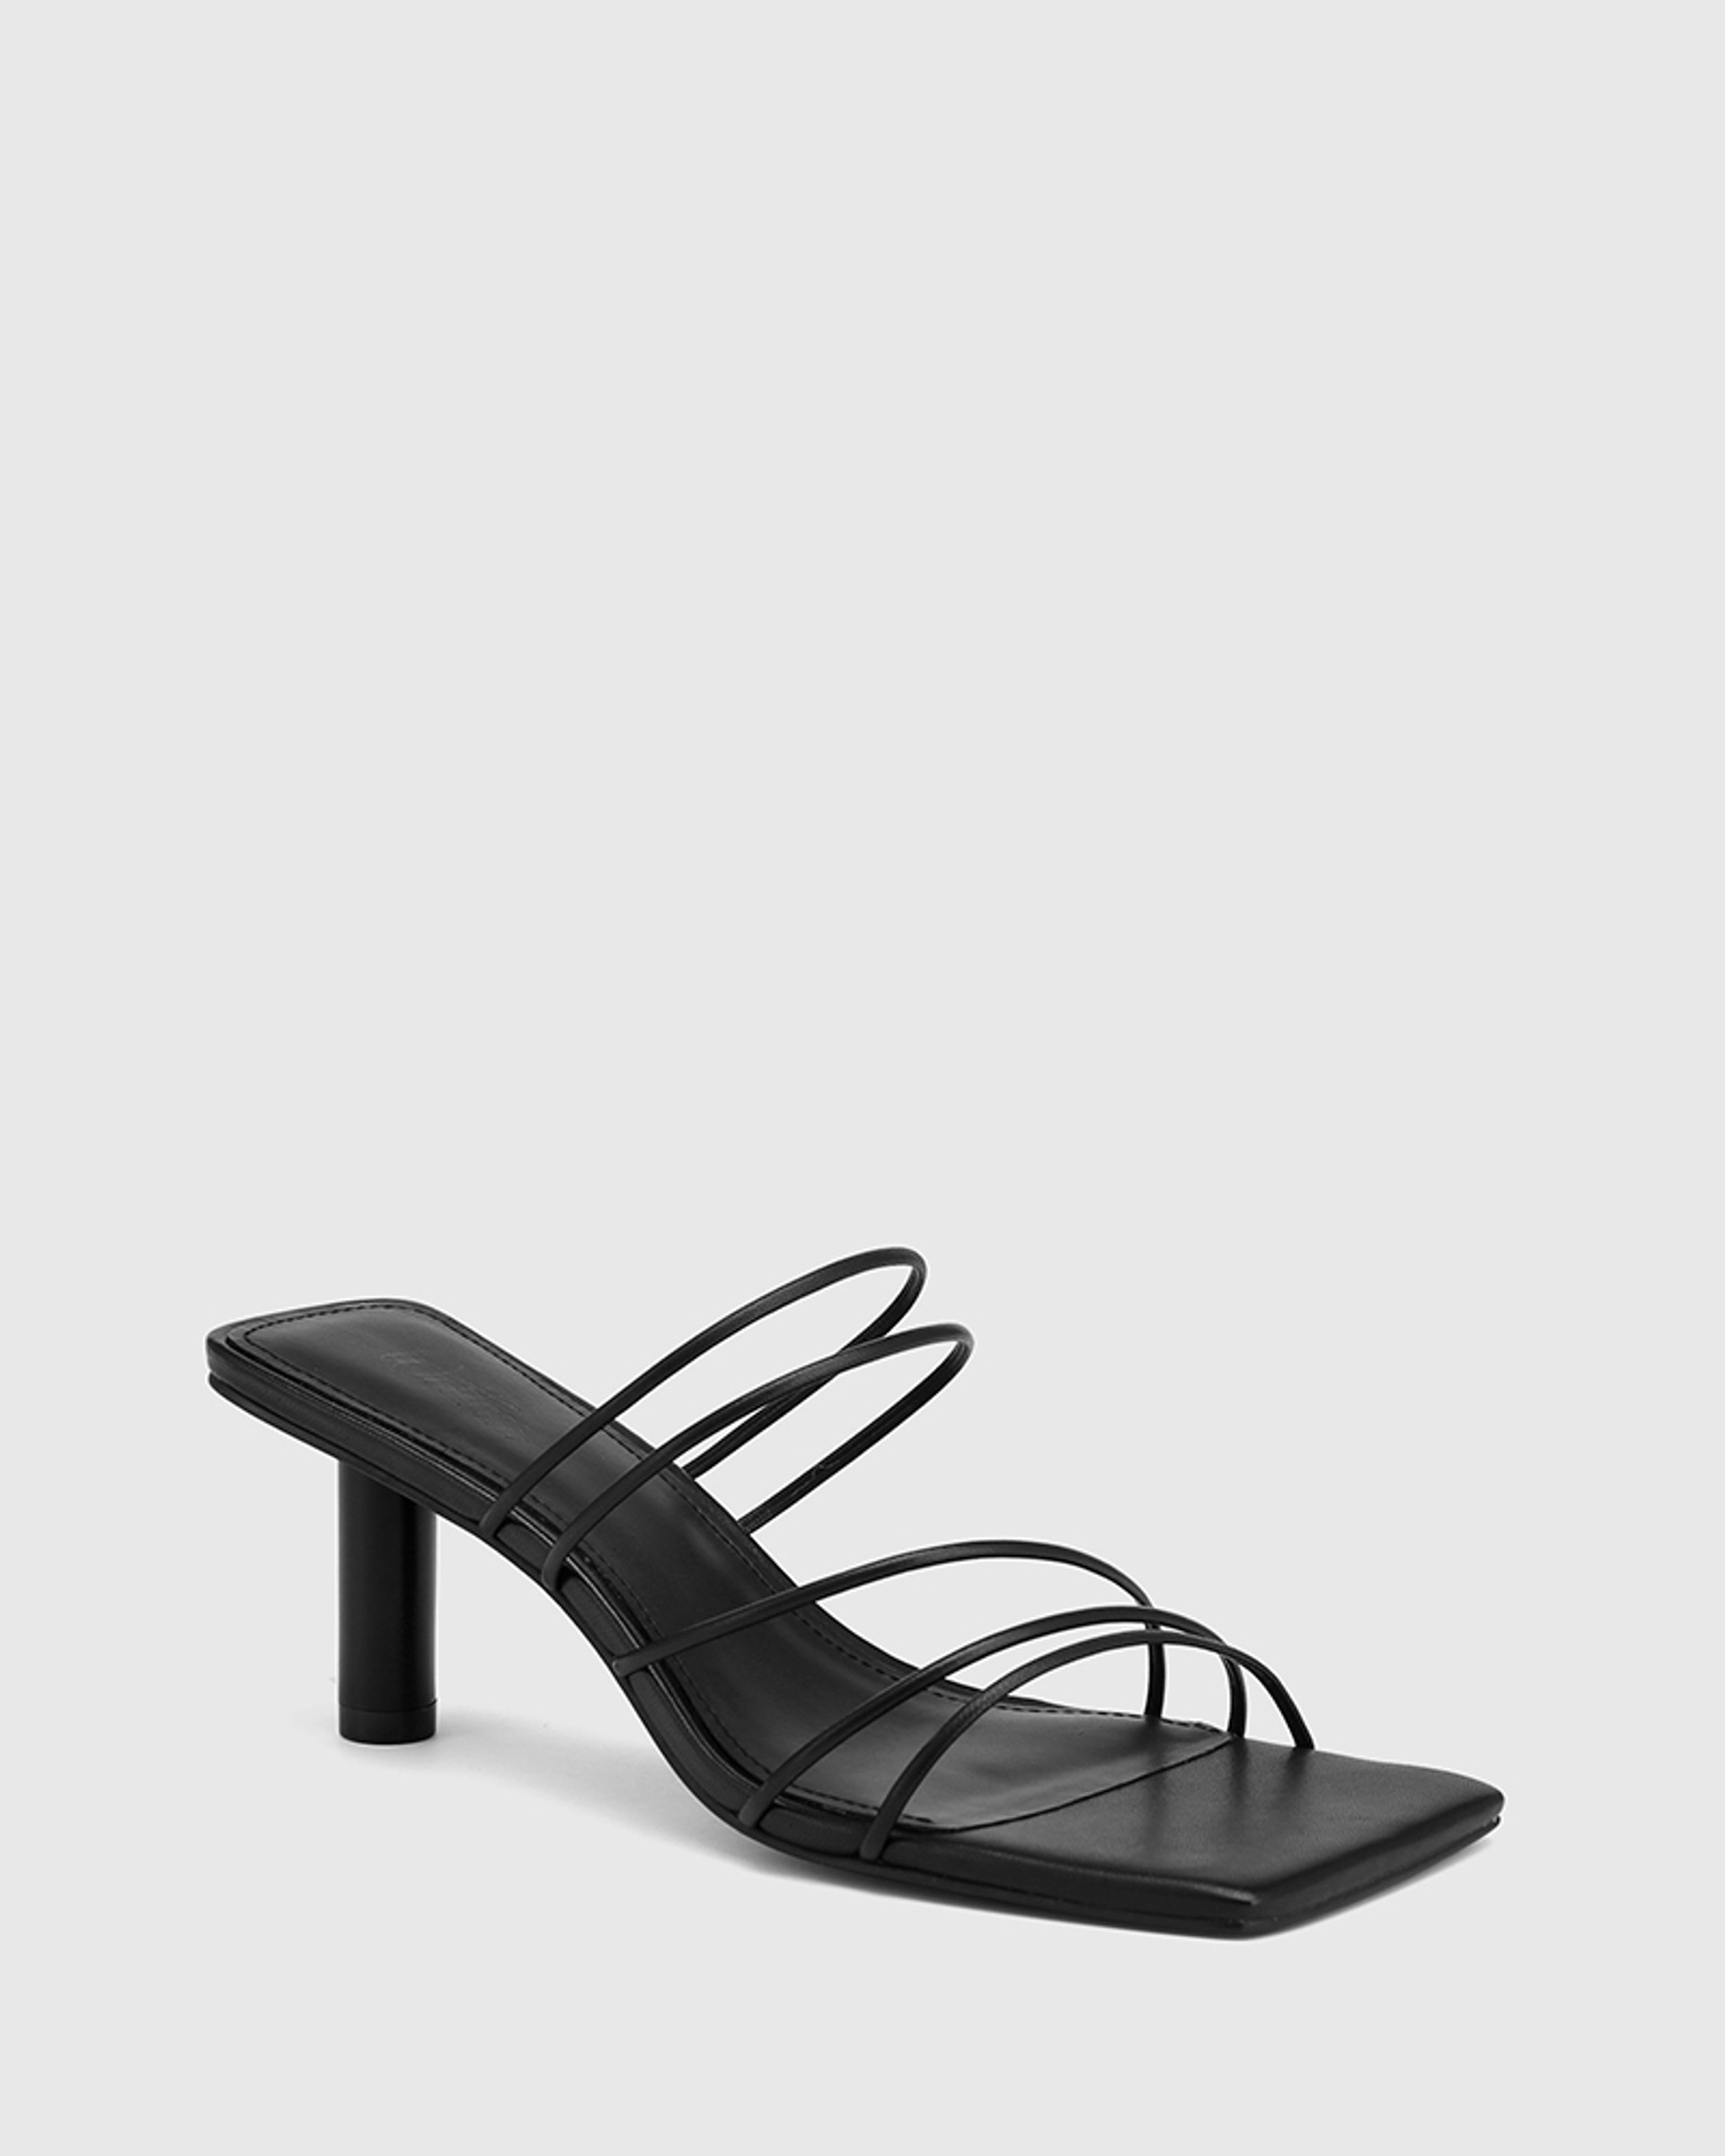 Klaire Black Leather Strappy Square Toe Sandal